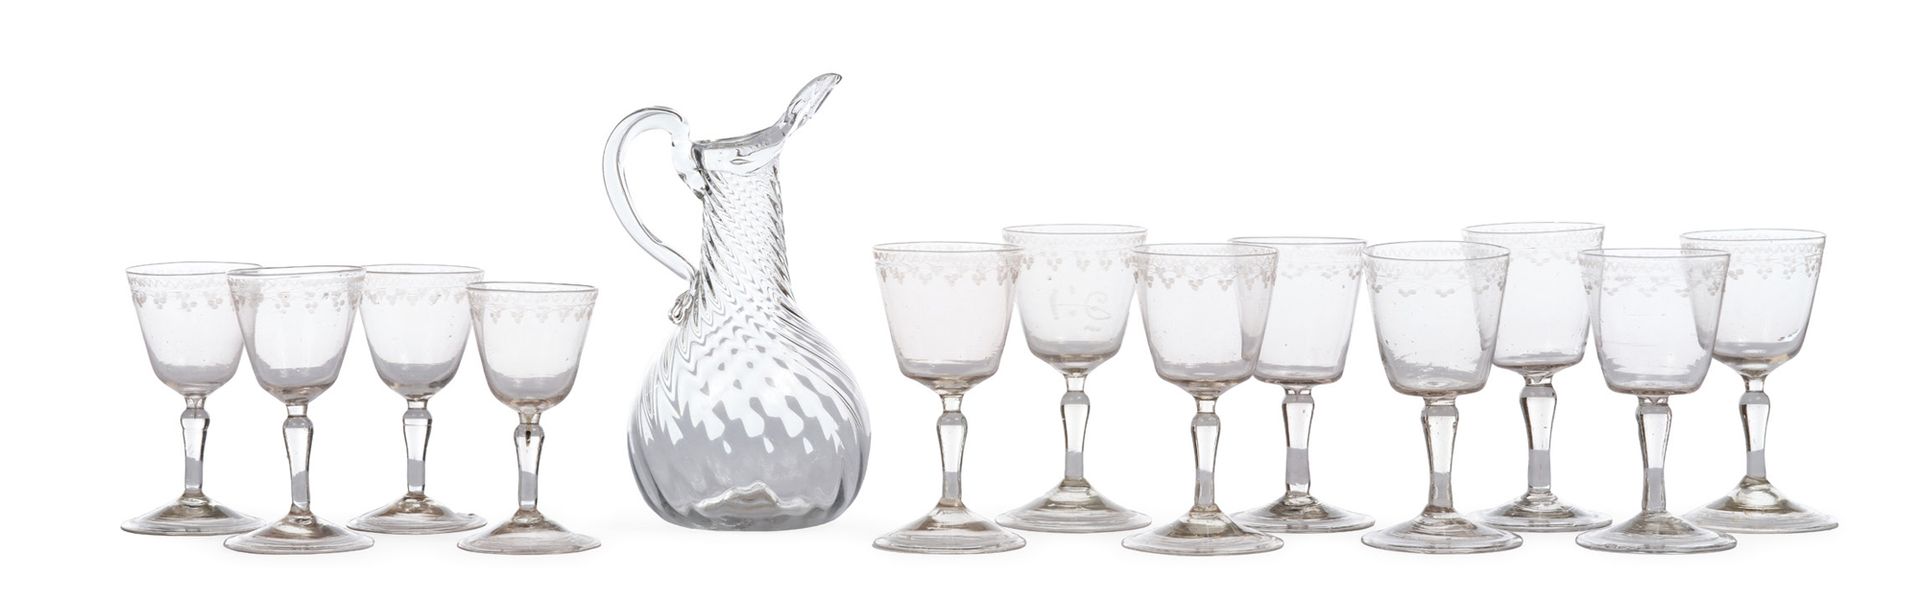 Null 一组由八个大杯子和四个小杯子组成的玻璃杯，蕨类玻璃，漂亮的透明度，截顶的圆锥杯上刻有酒轮，杯脚有折边。
法国，18世纪。
高度：12至14厘米
边缘直&hellip;